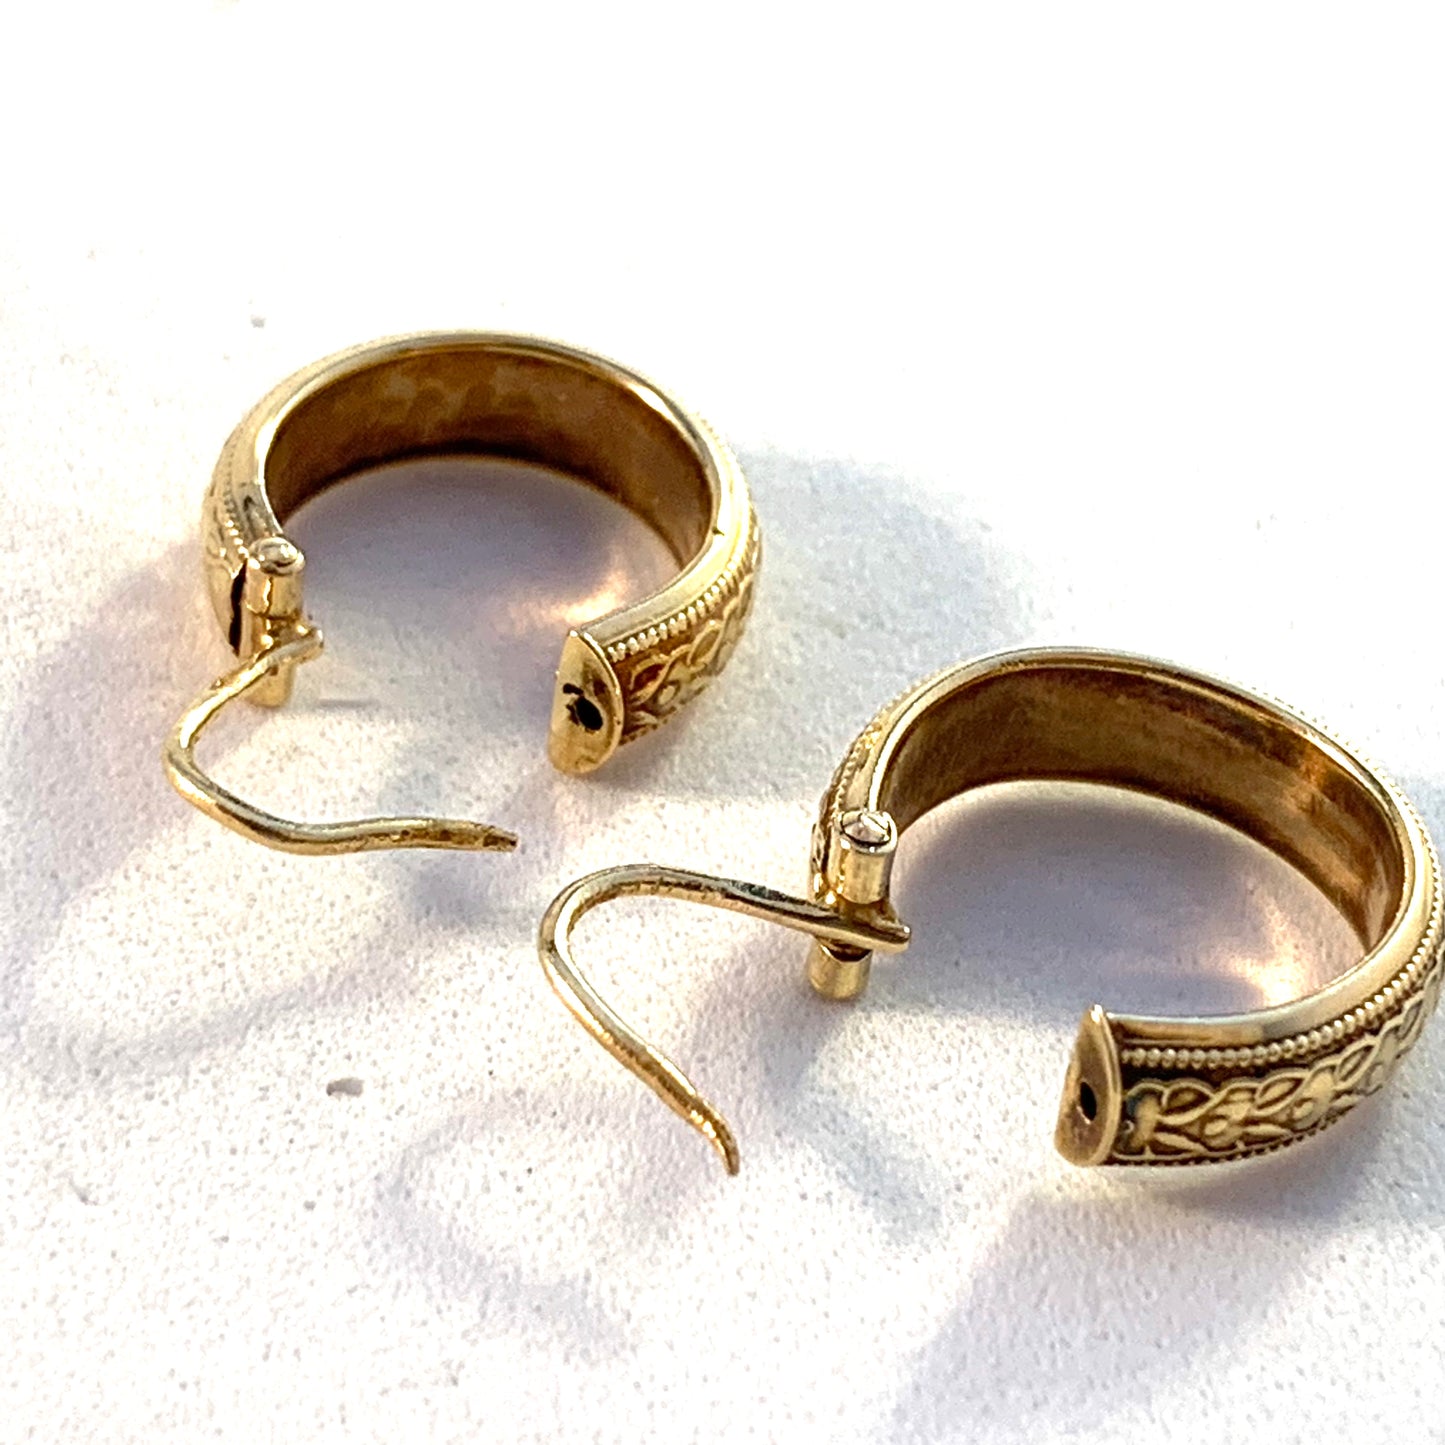 Antique 18k Gold Earrings. Sweden c 1910s.